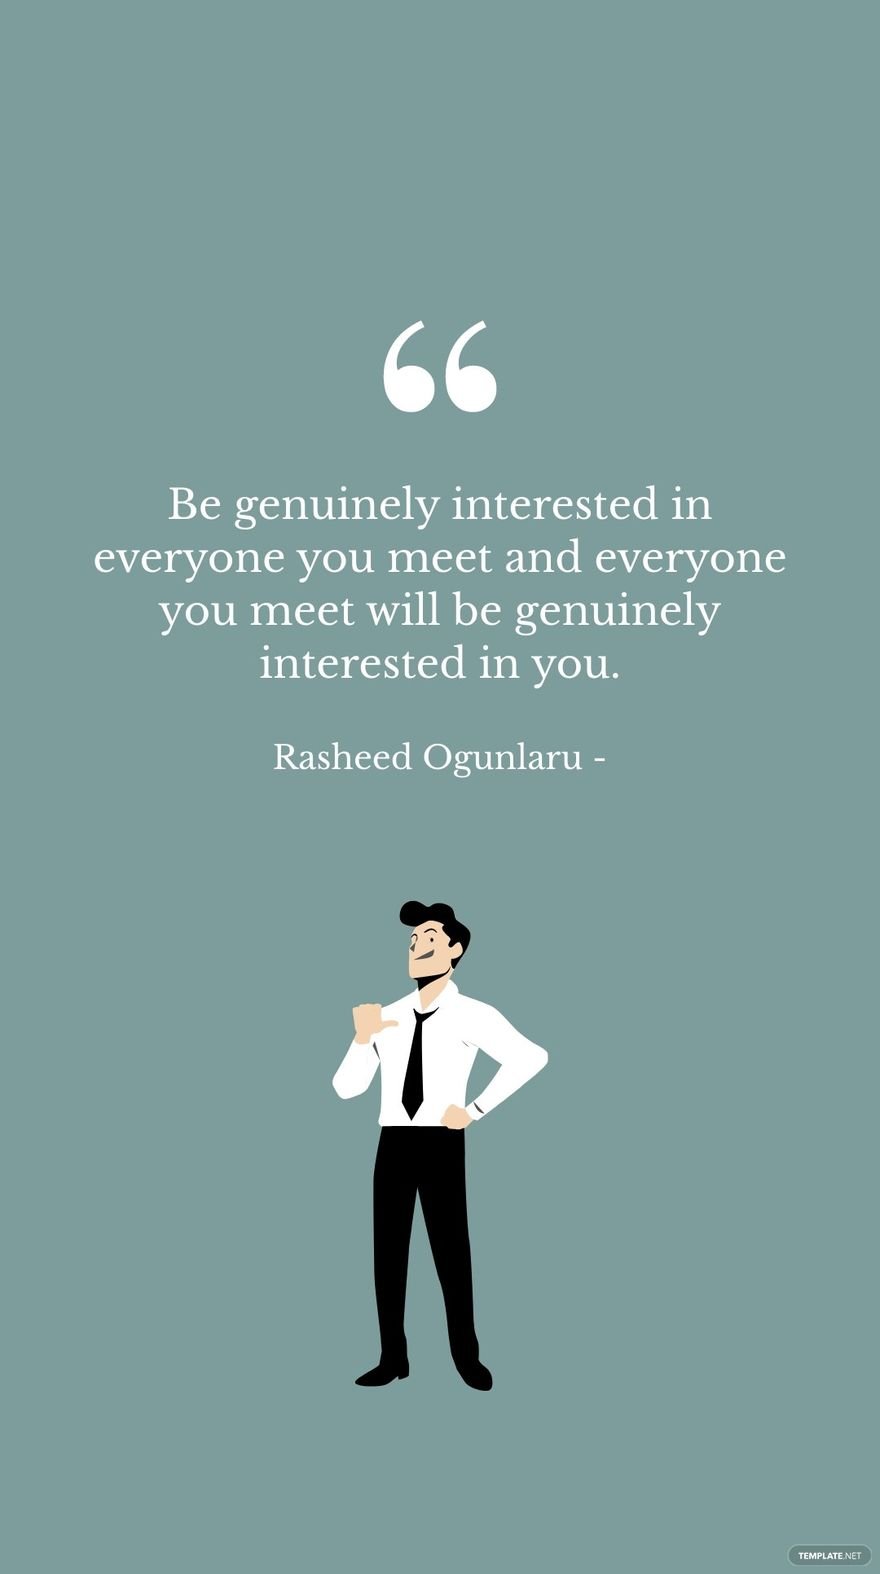 Rasheed Ogunlaru - Be genuinely interested in everyone you meet and everyone you meet will be genuinely interested in you.